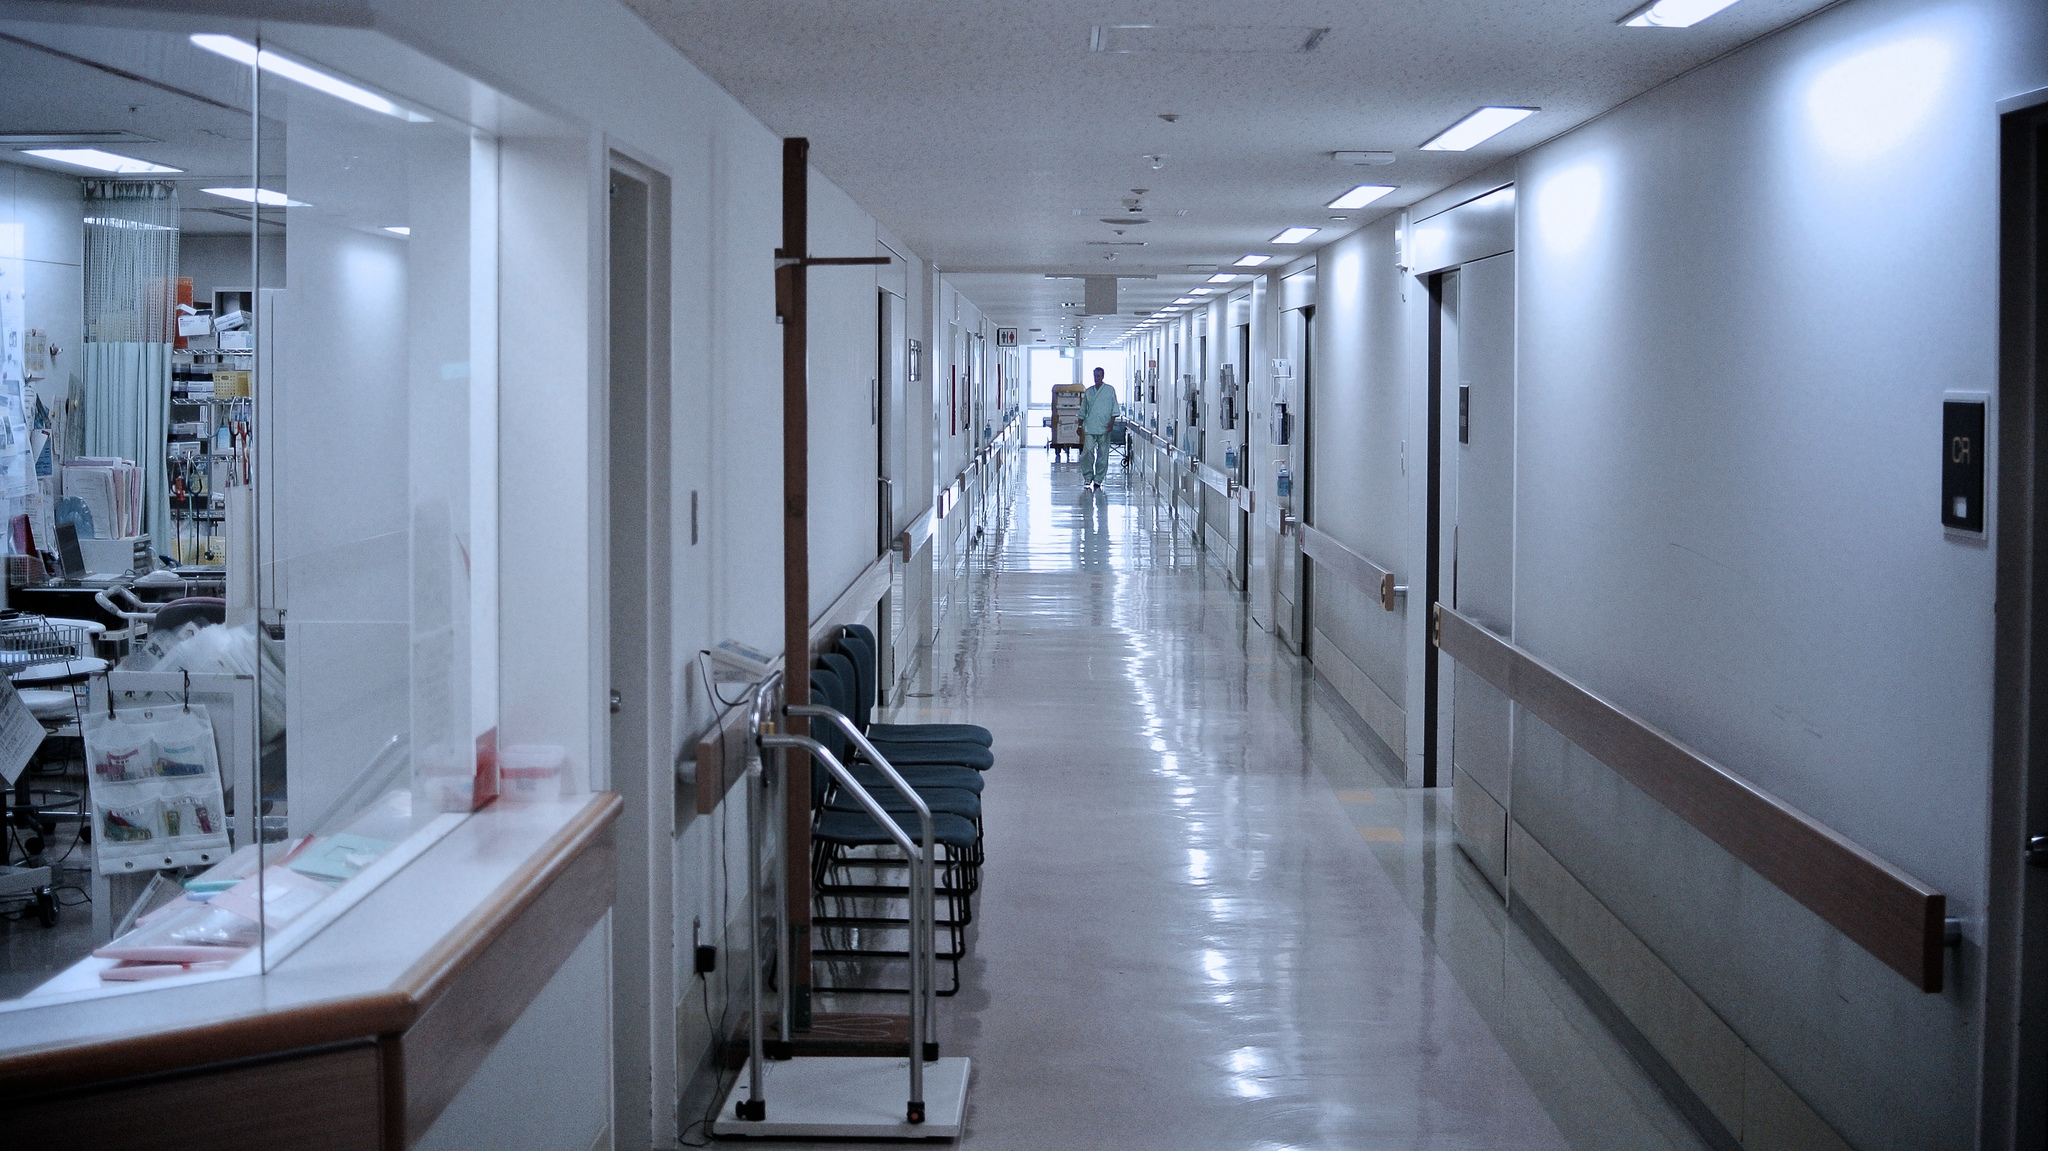 Japan Hospital – Telegraph